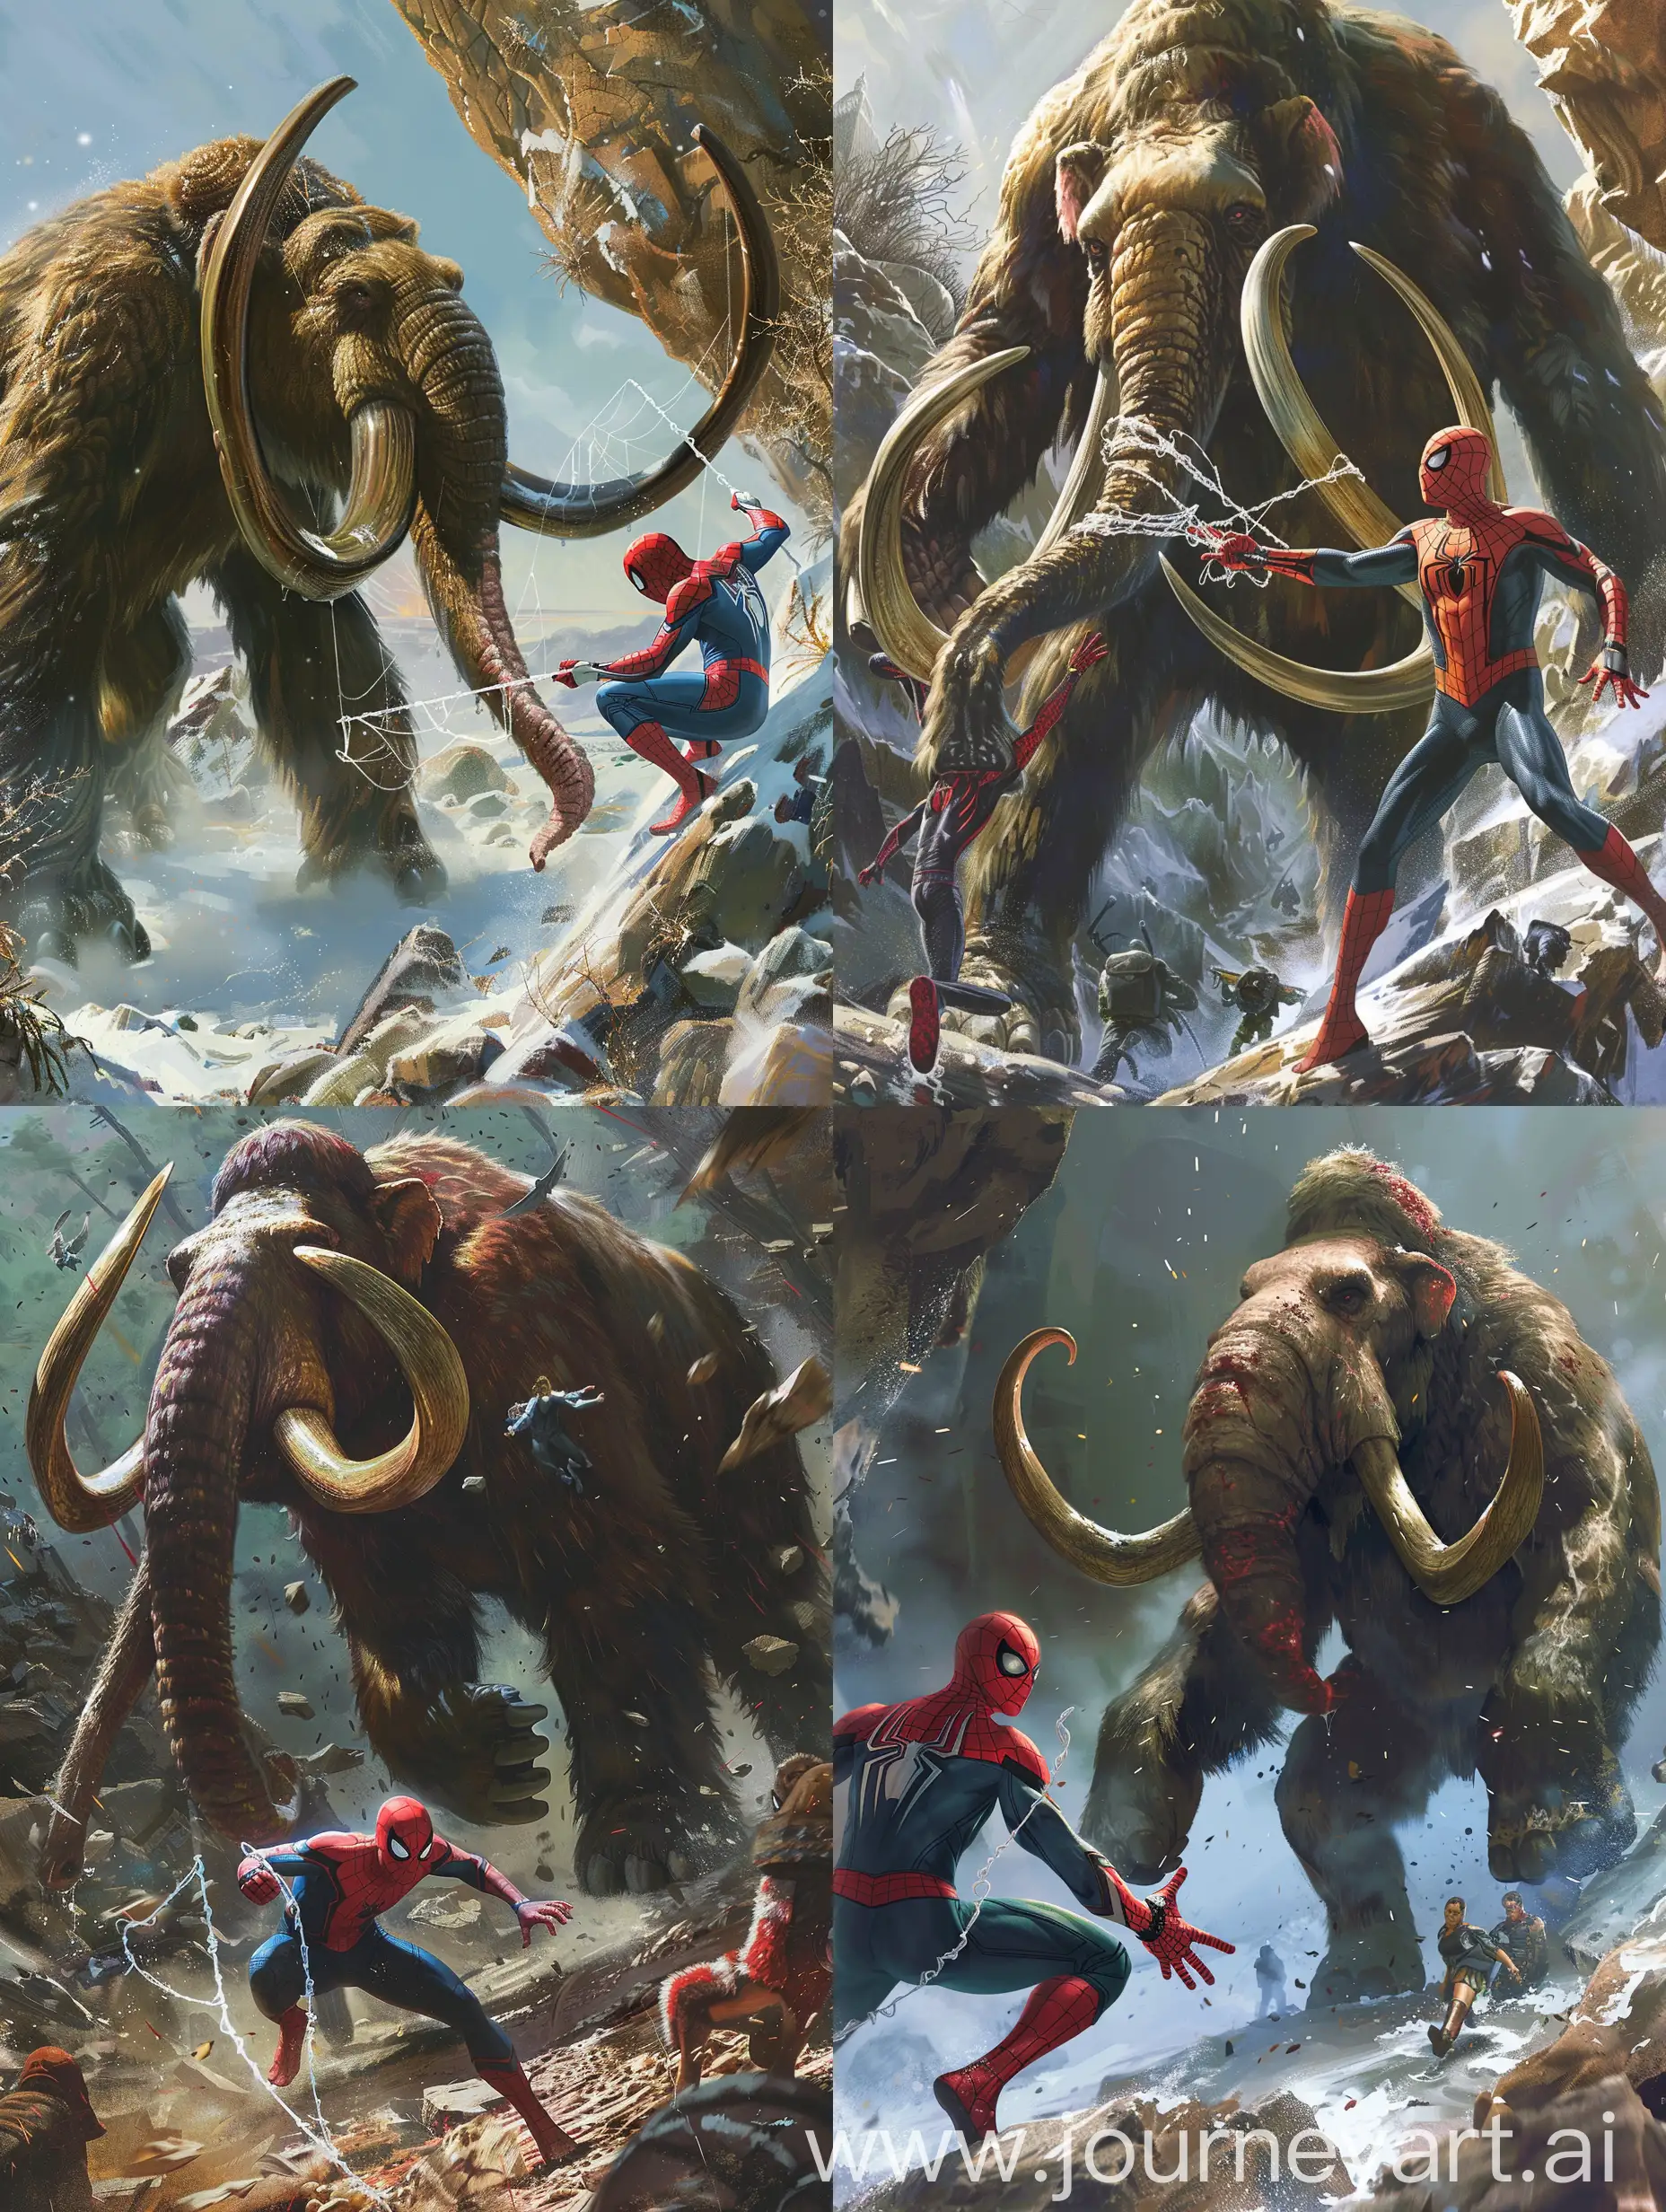 Epic-Battle-Mammoth-vs-SpiderMan